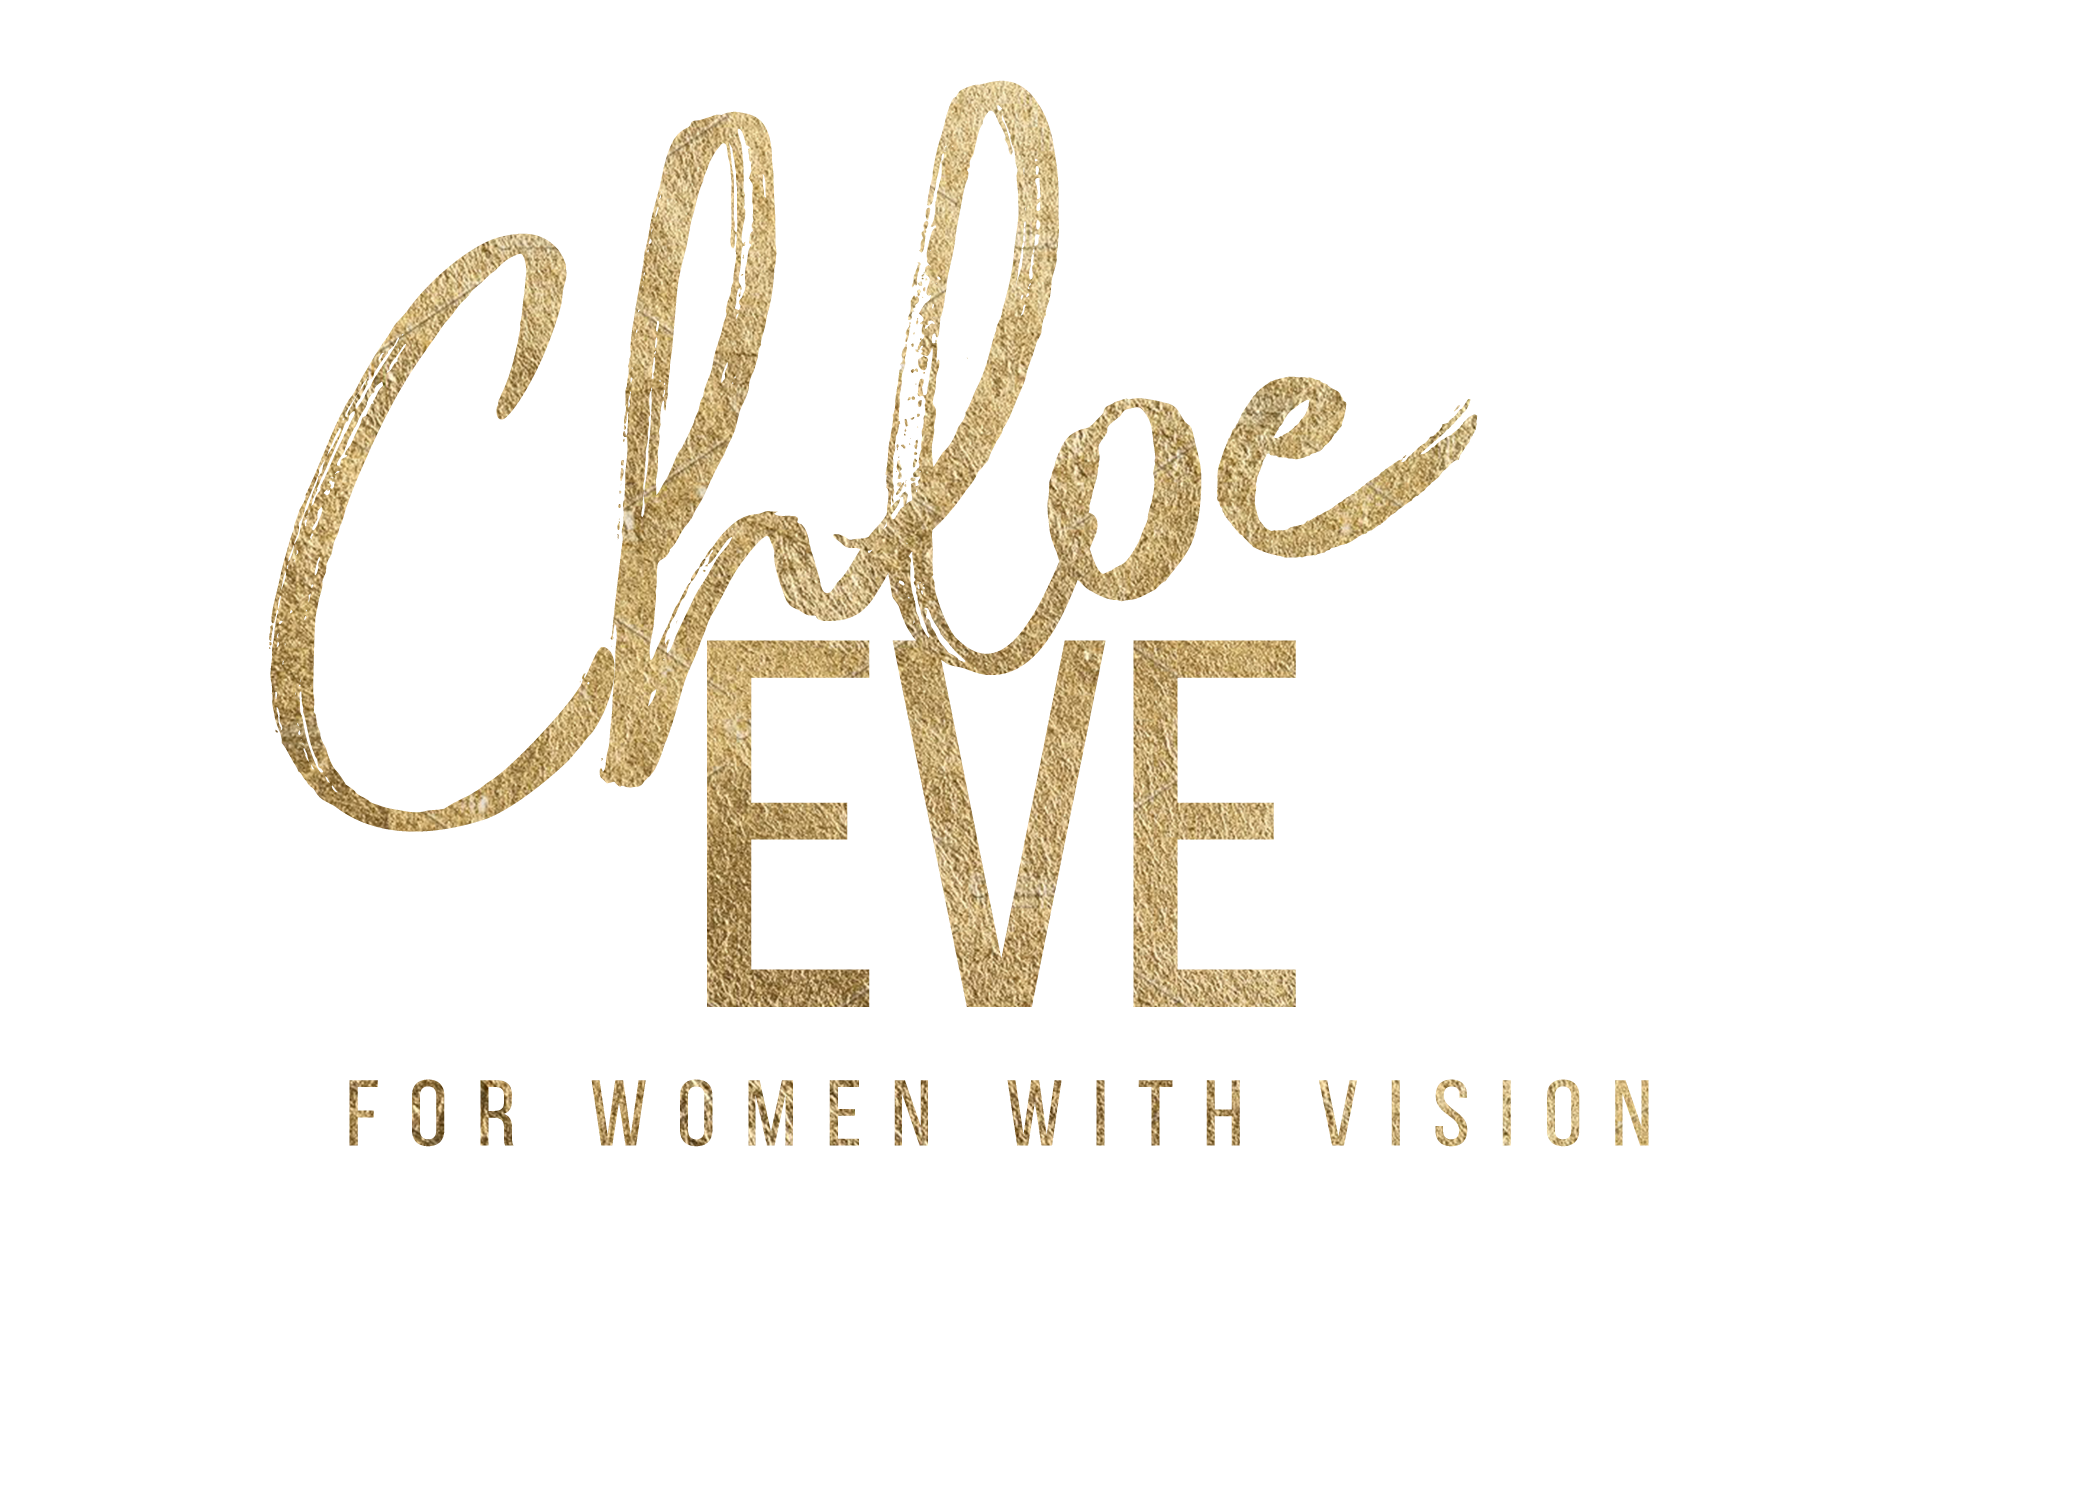 Chloe Eve